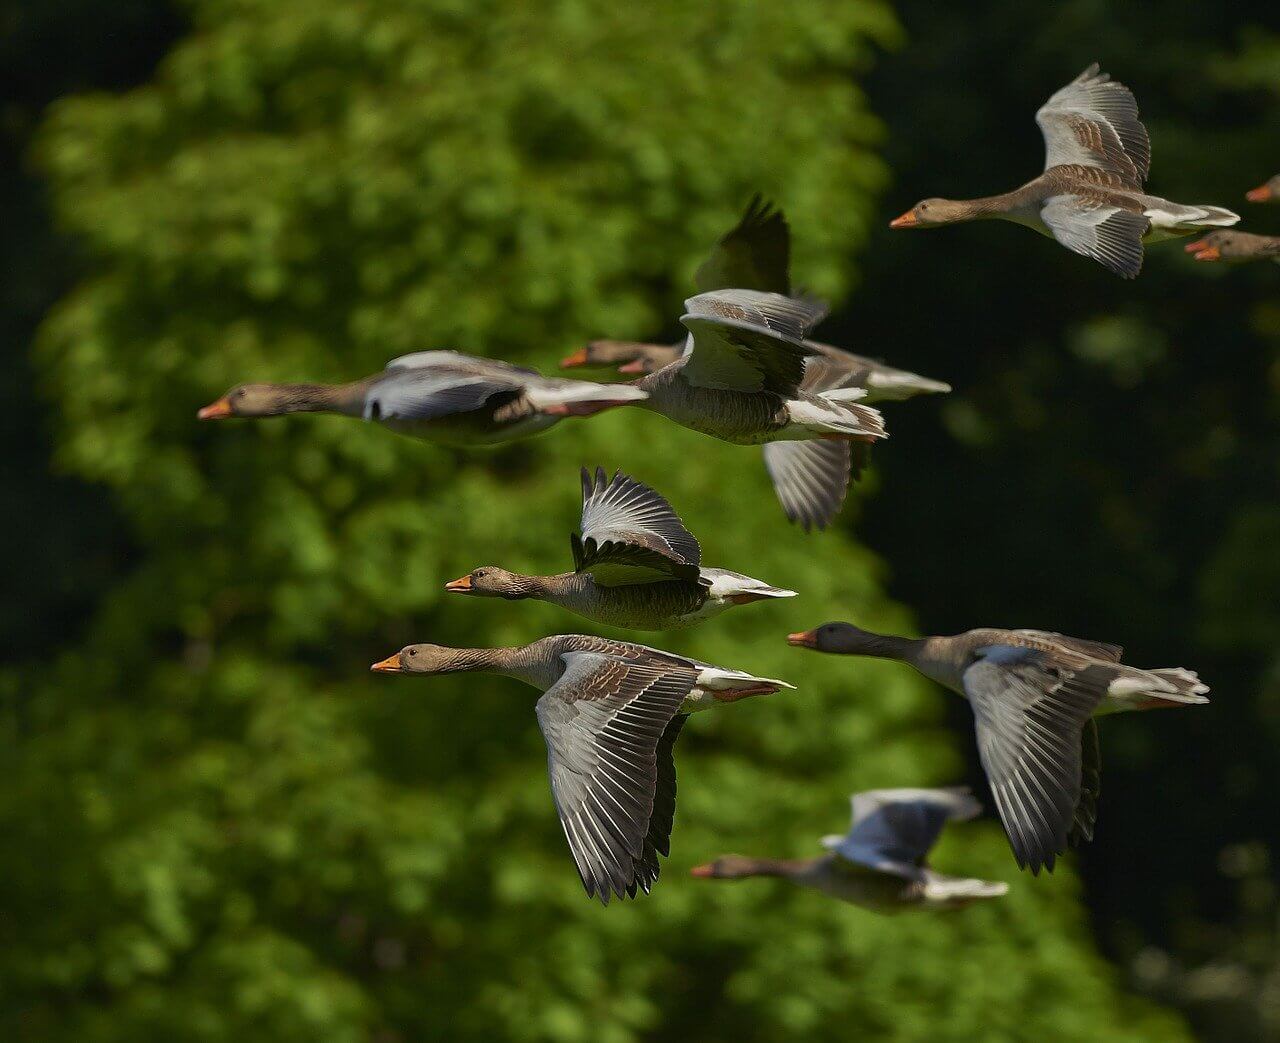 Goose : Behavior, Description and Distribution, Life Cycle, Migration and Navigation